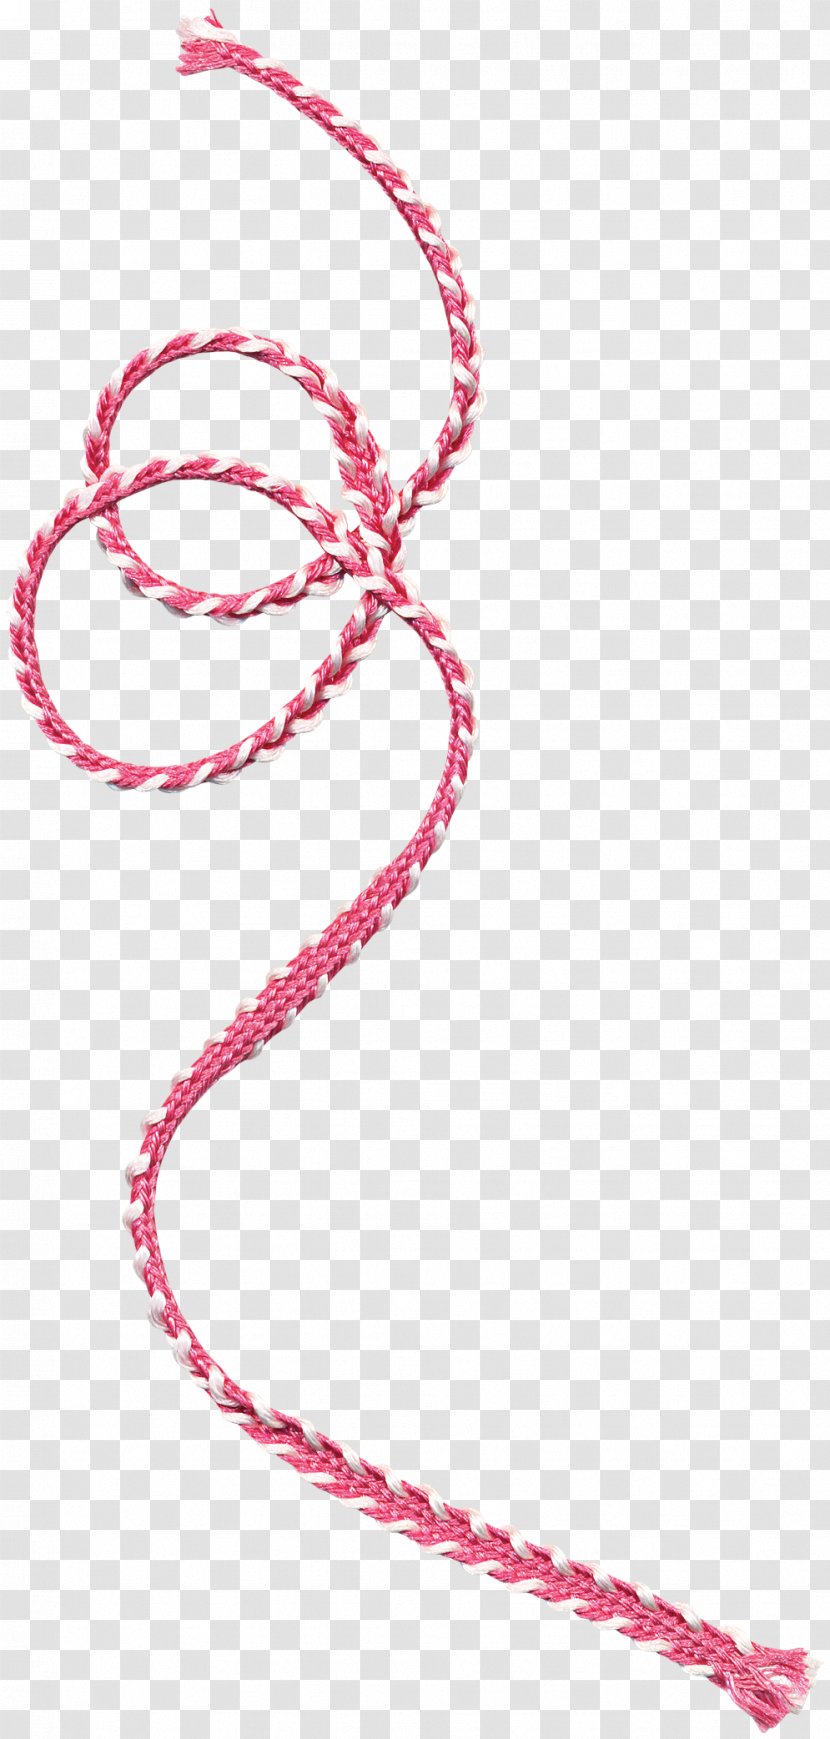 Dynamic Rope Knot Clip Art - Text - Color Transparent PNG